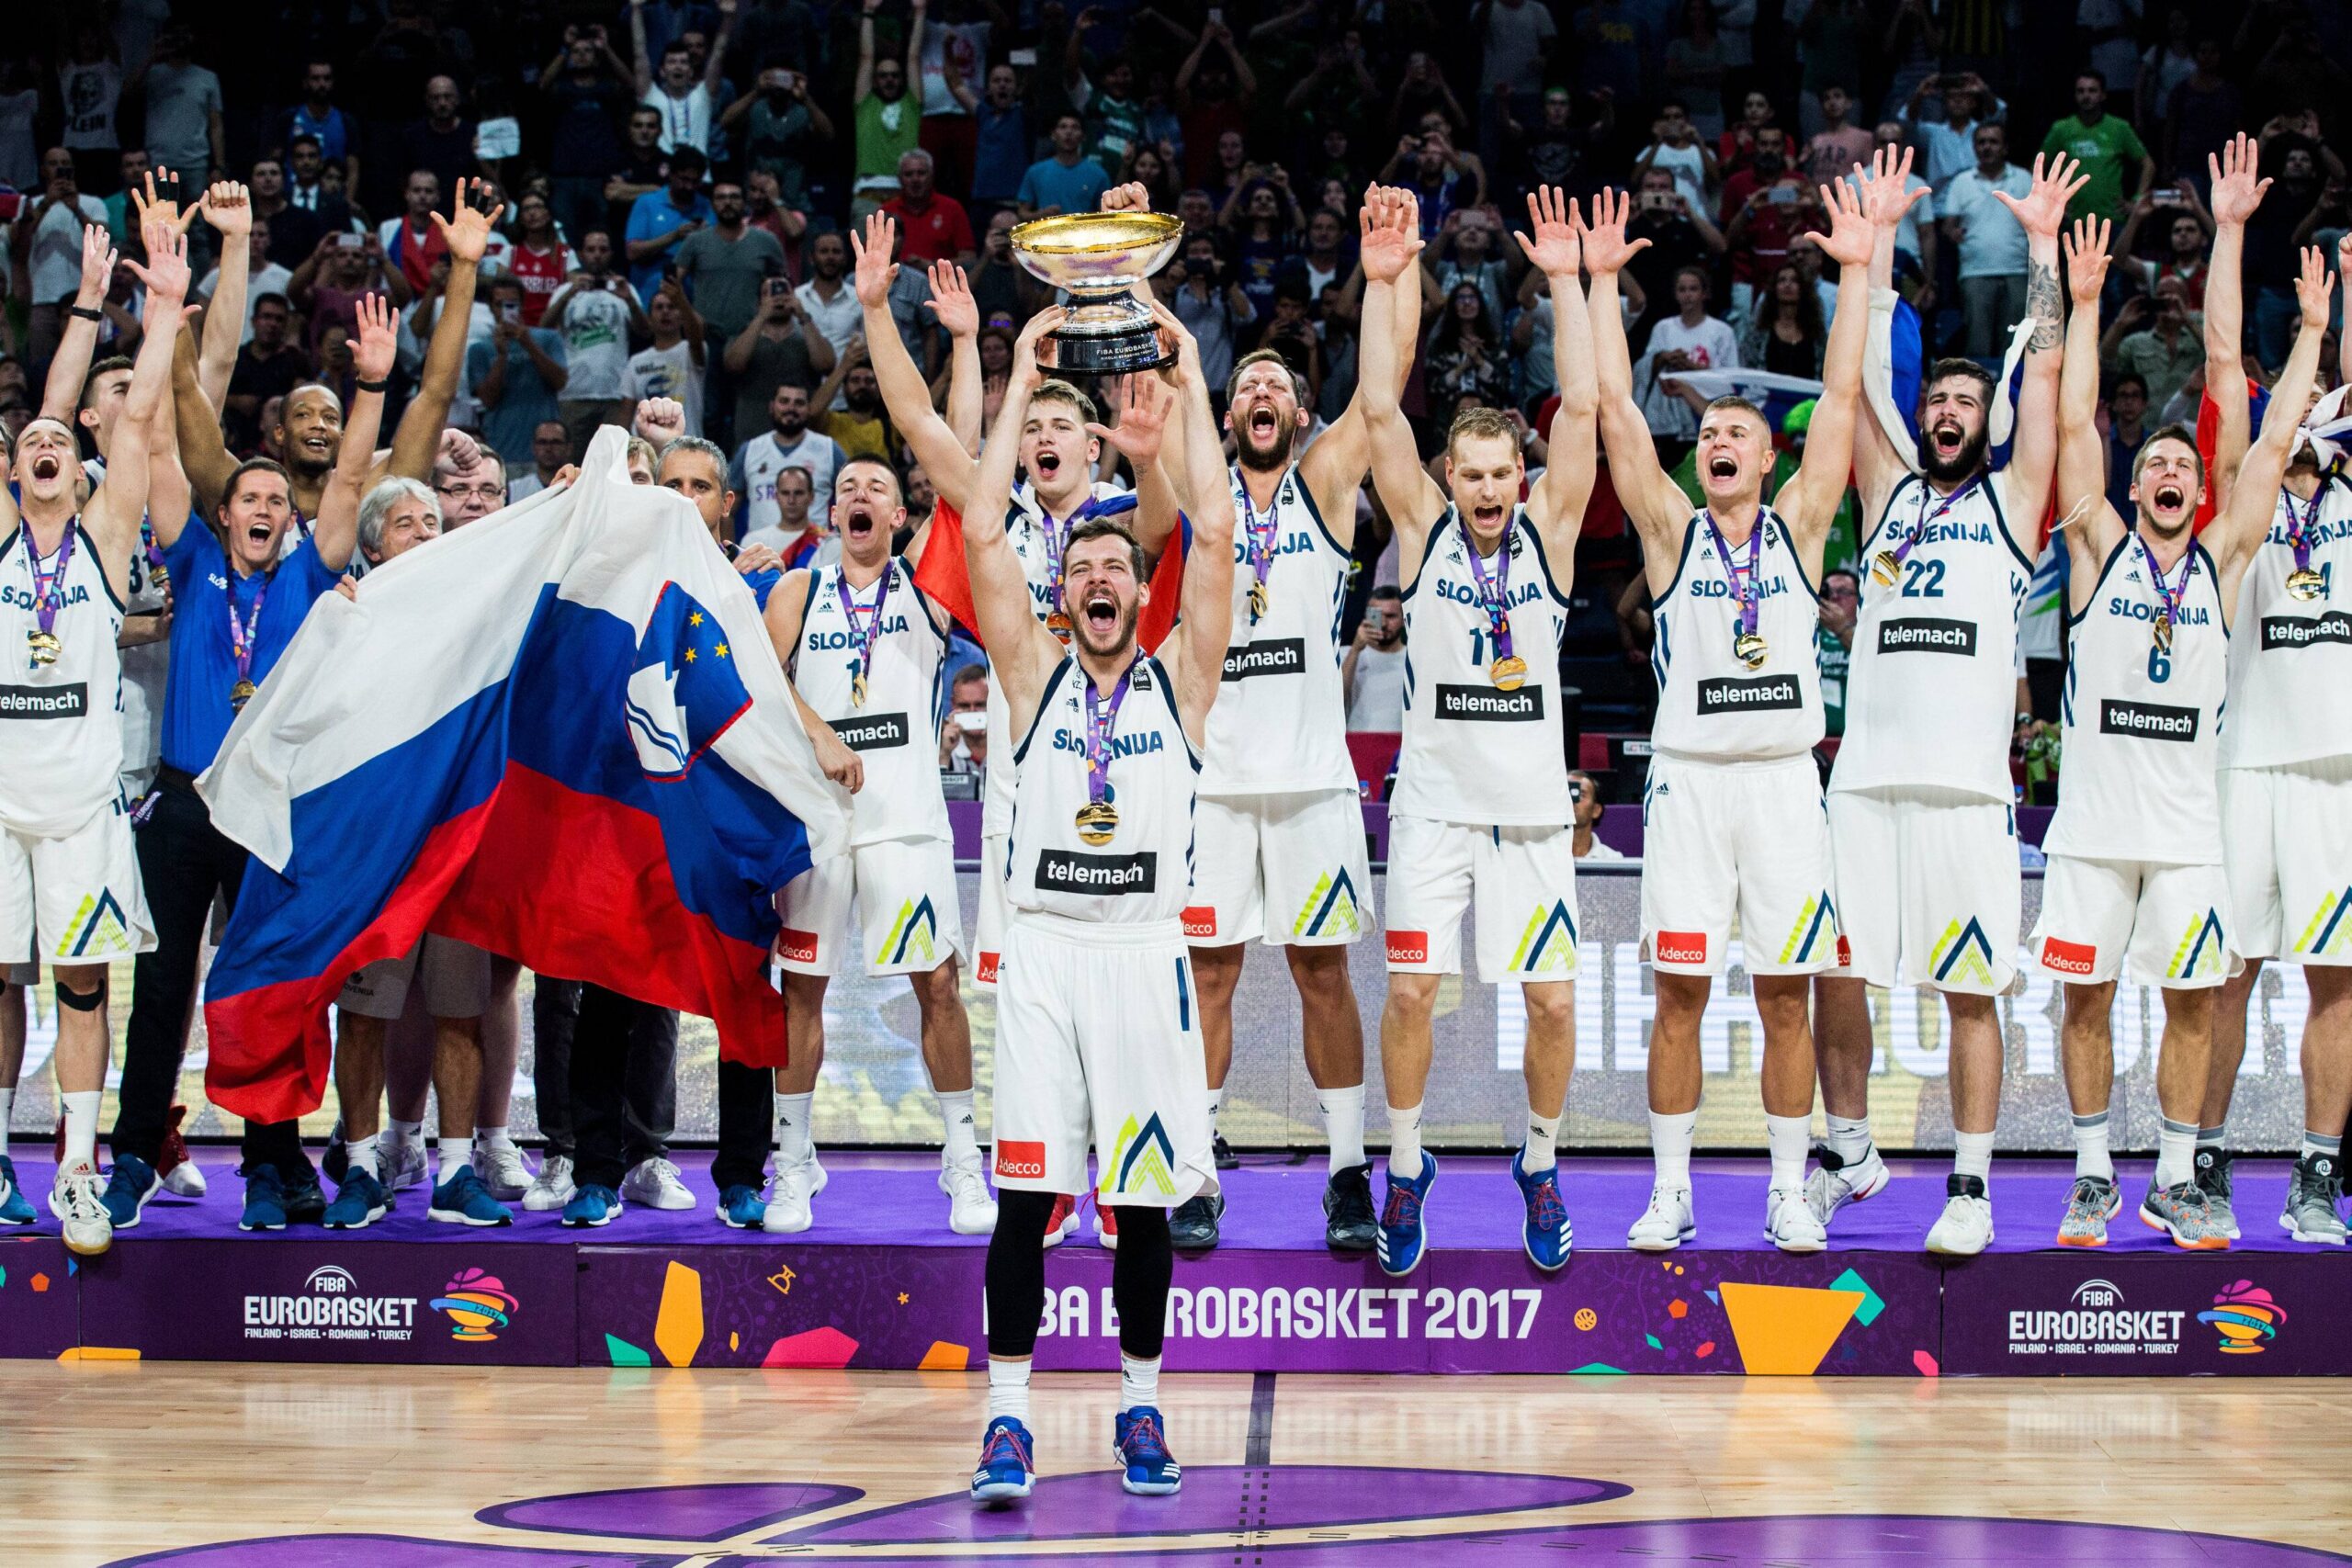 Eiropas basketbola ilgi gaidītie svētki – kura zvaigzne iemirdzēsies?